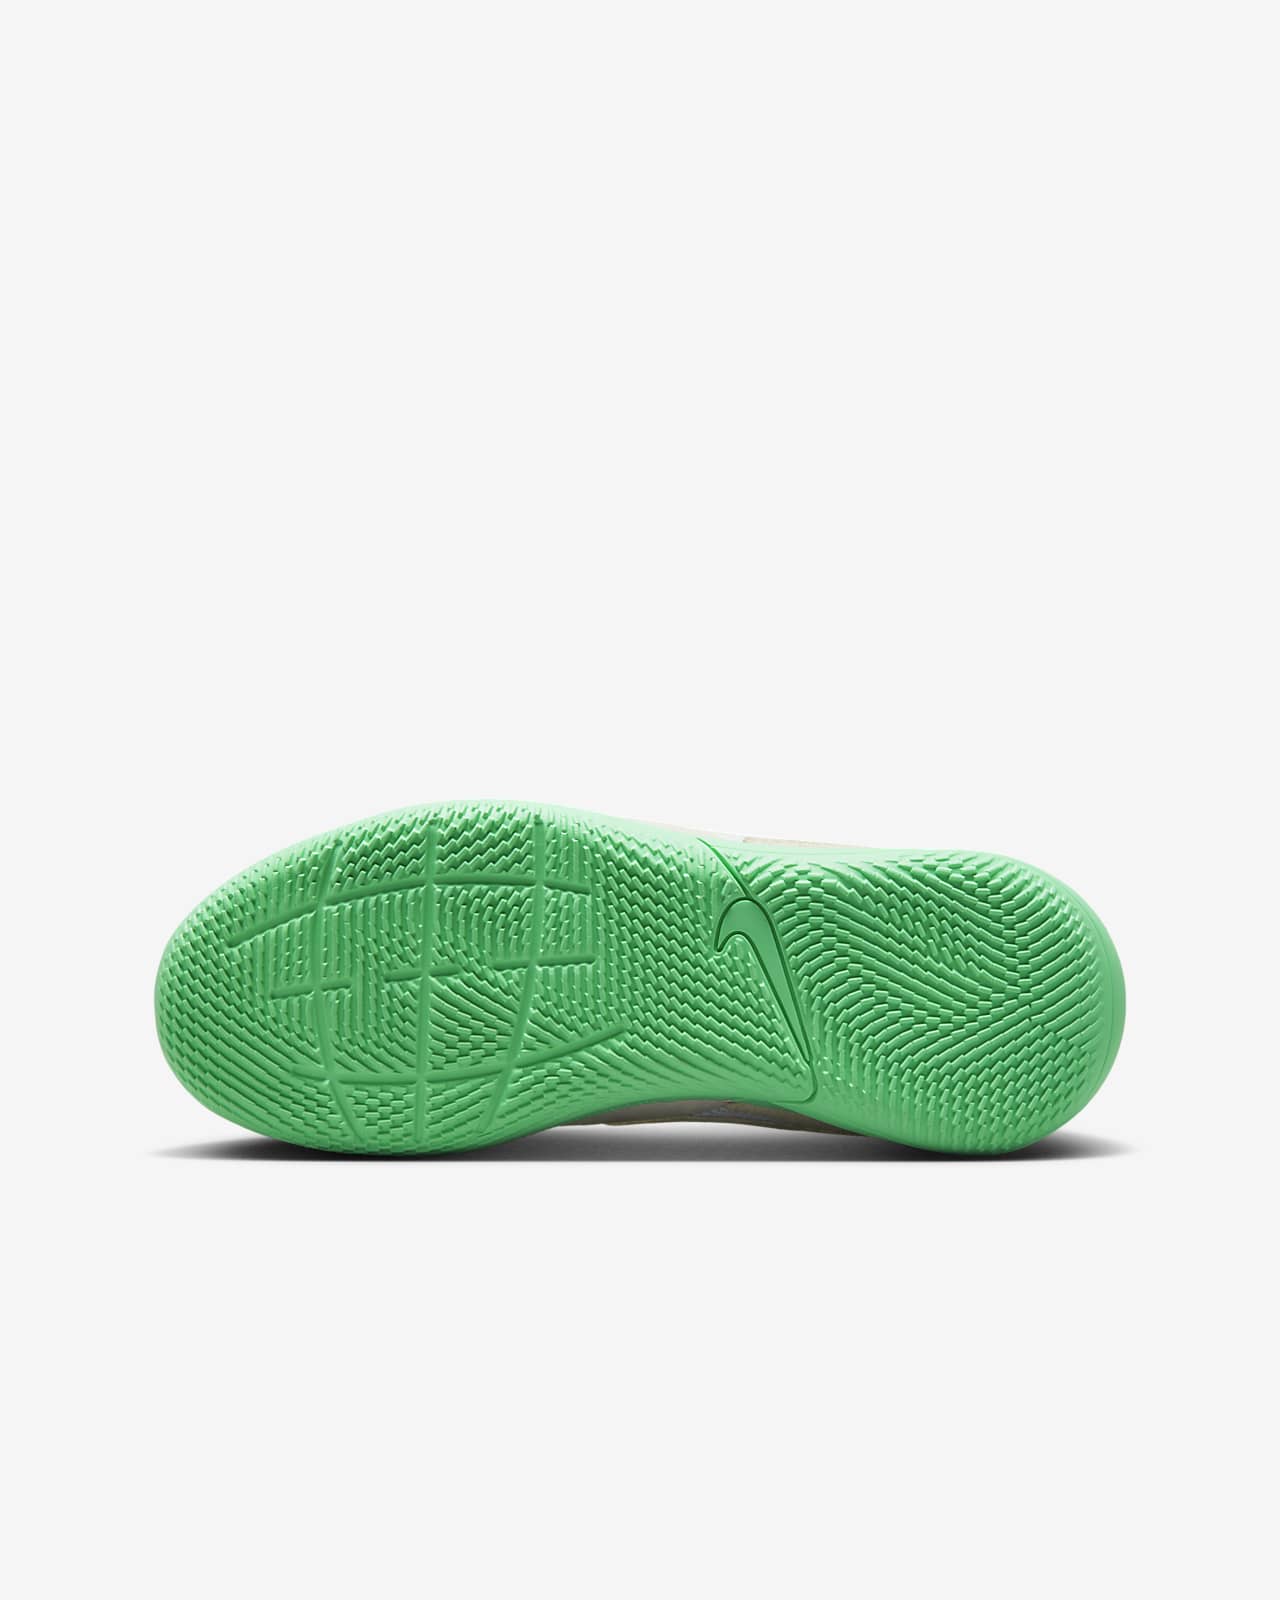 Nike Jr. Streetgato Shoes. Low-Top Soccer Little/Big Kids